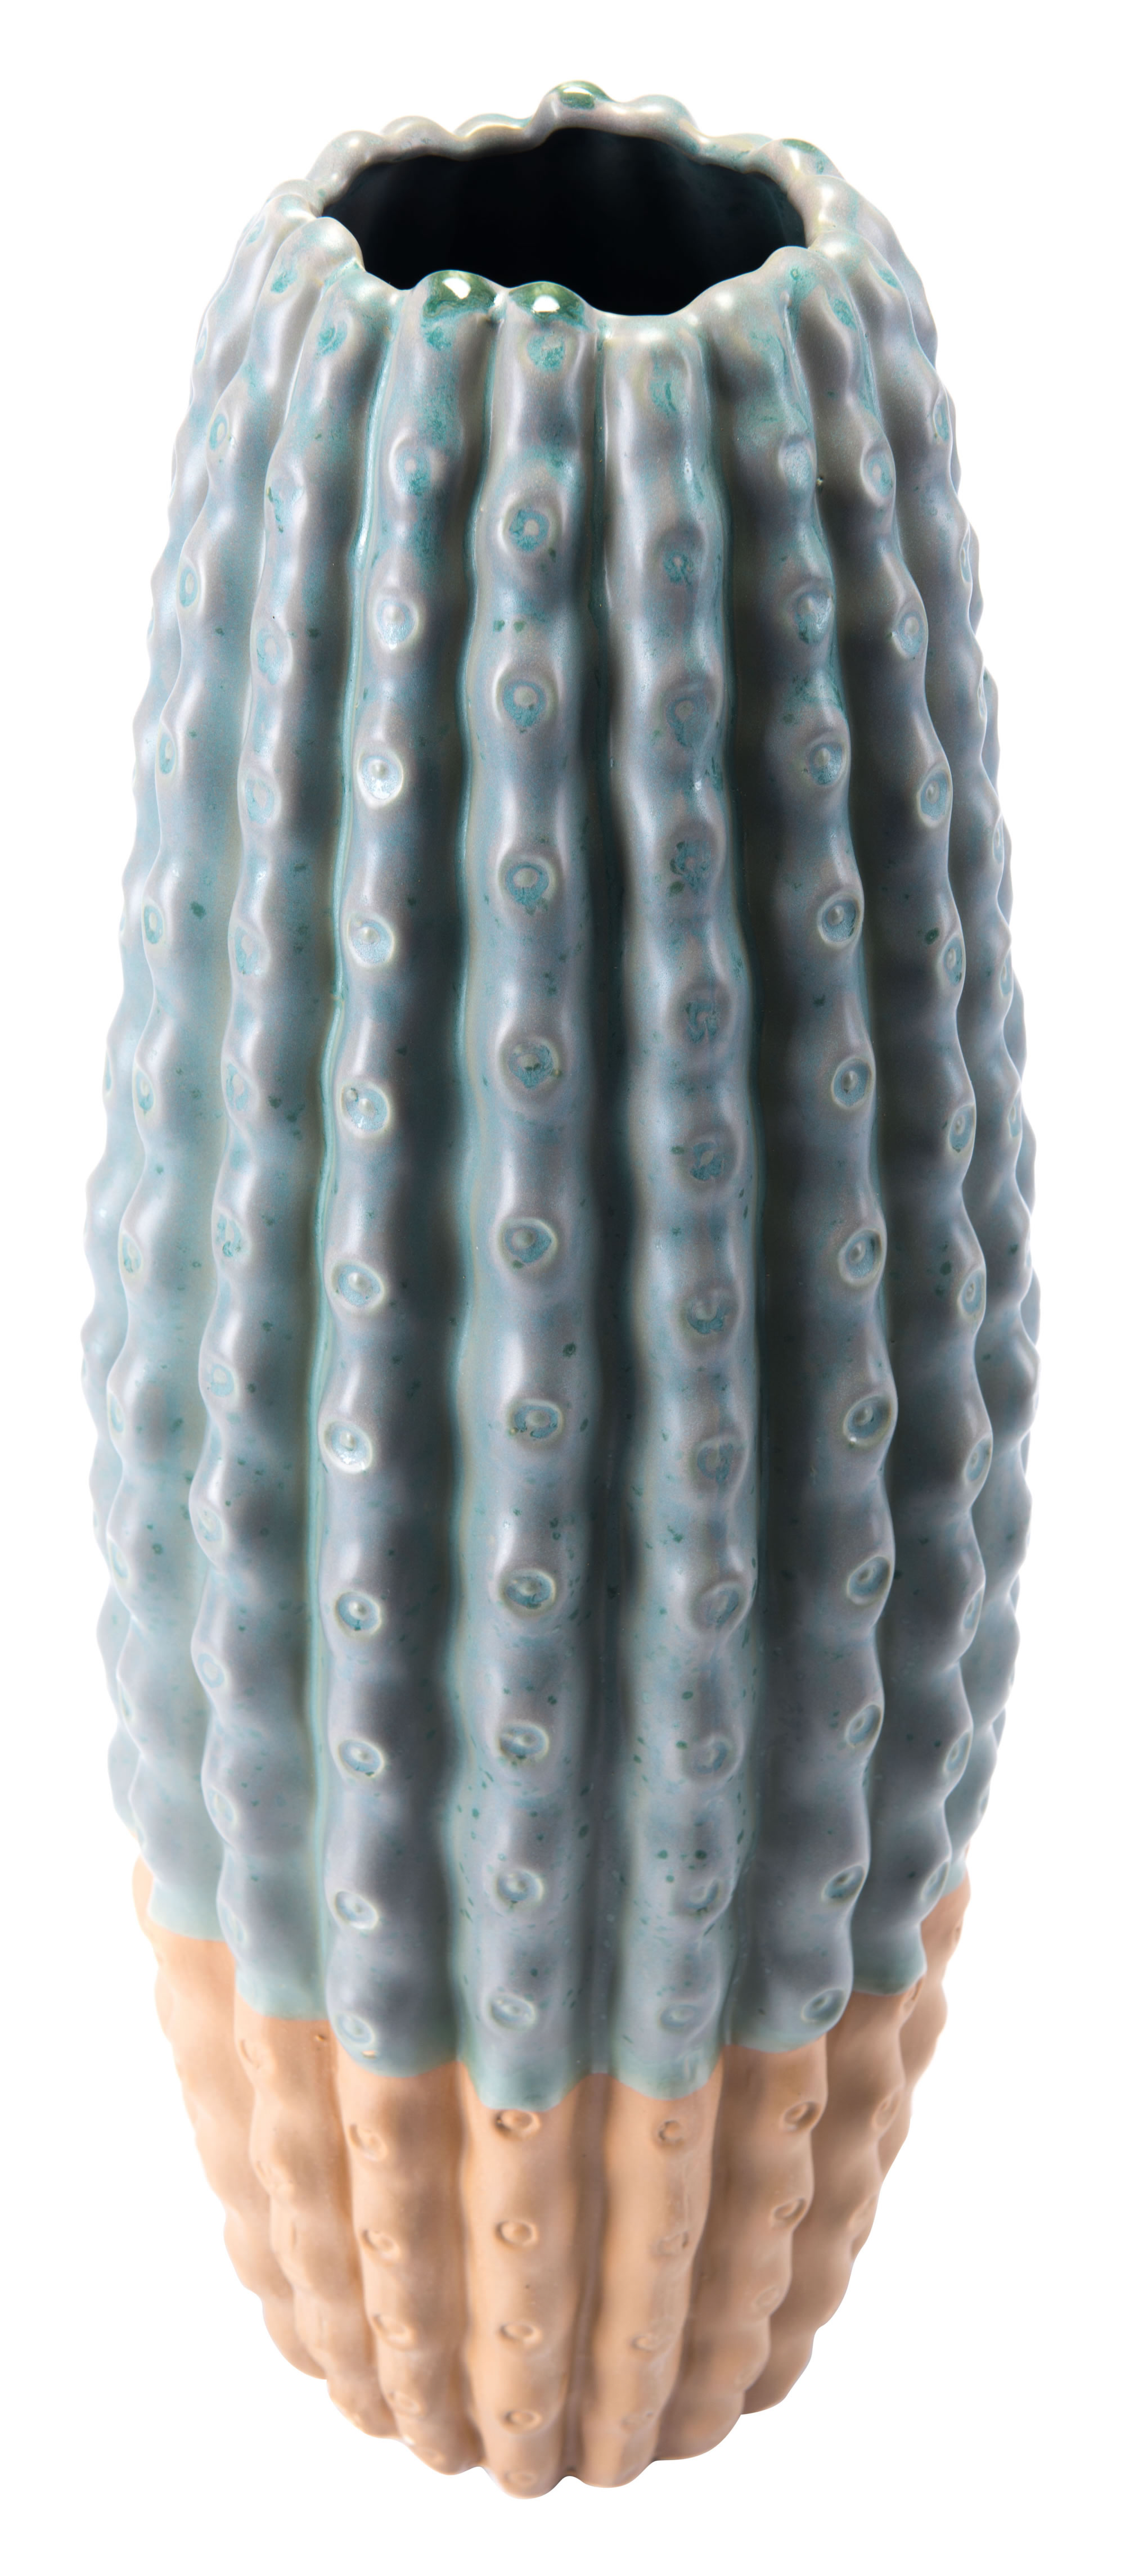 8.3" x 8.3" x 21.3" Green Ceramic Large Vase